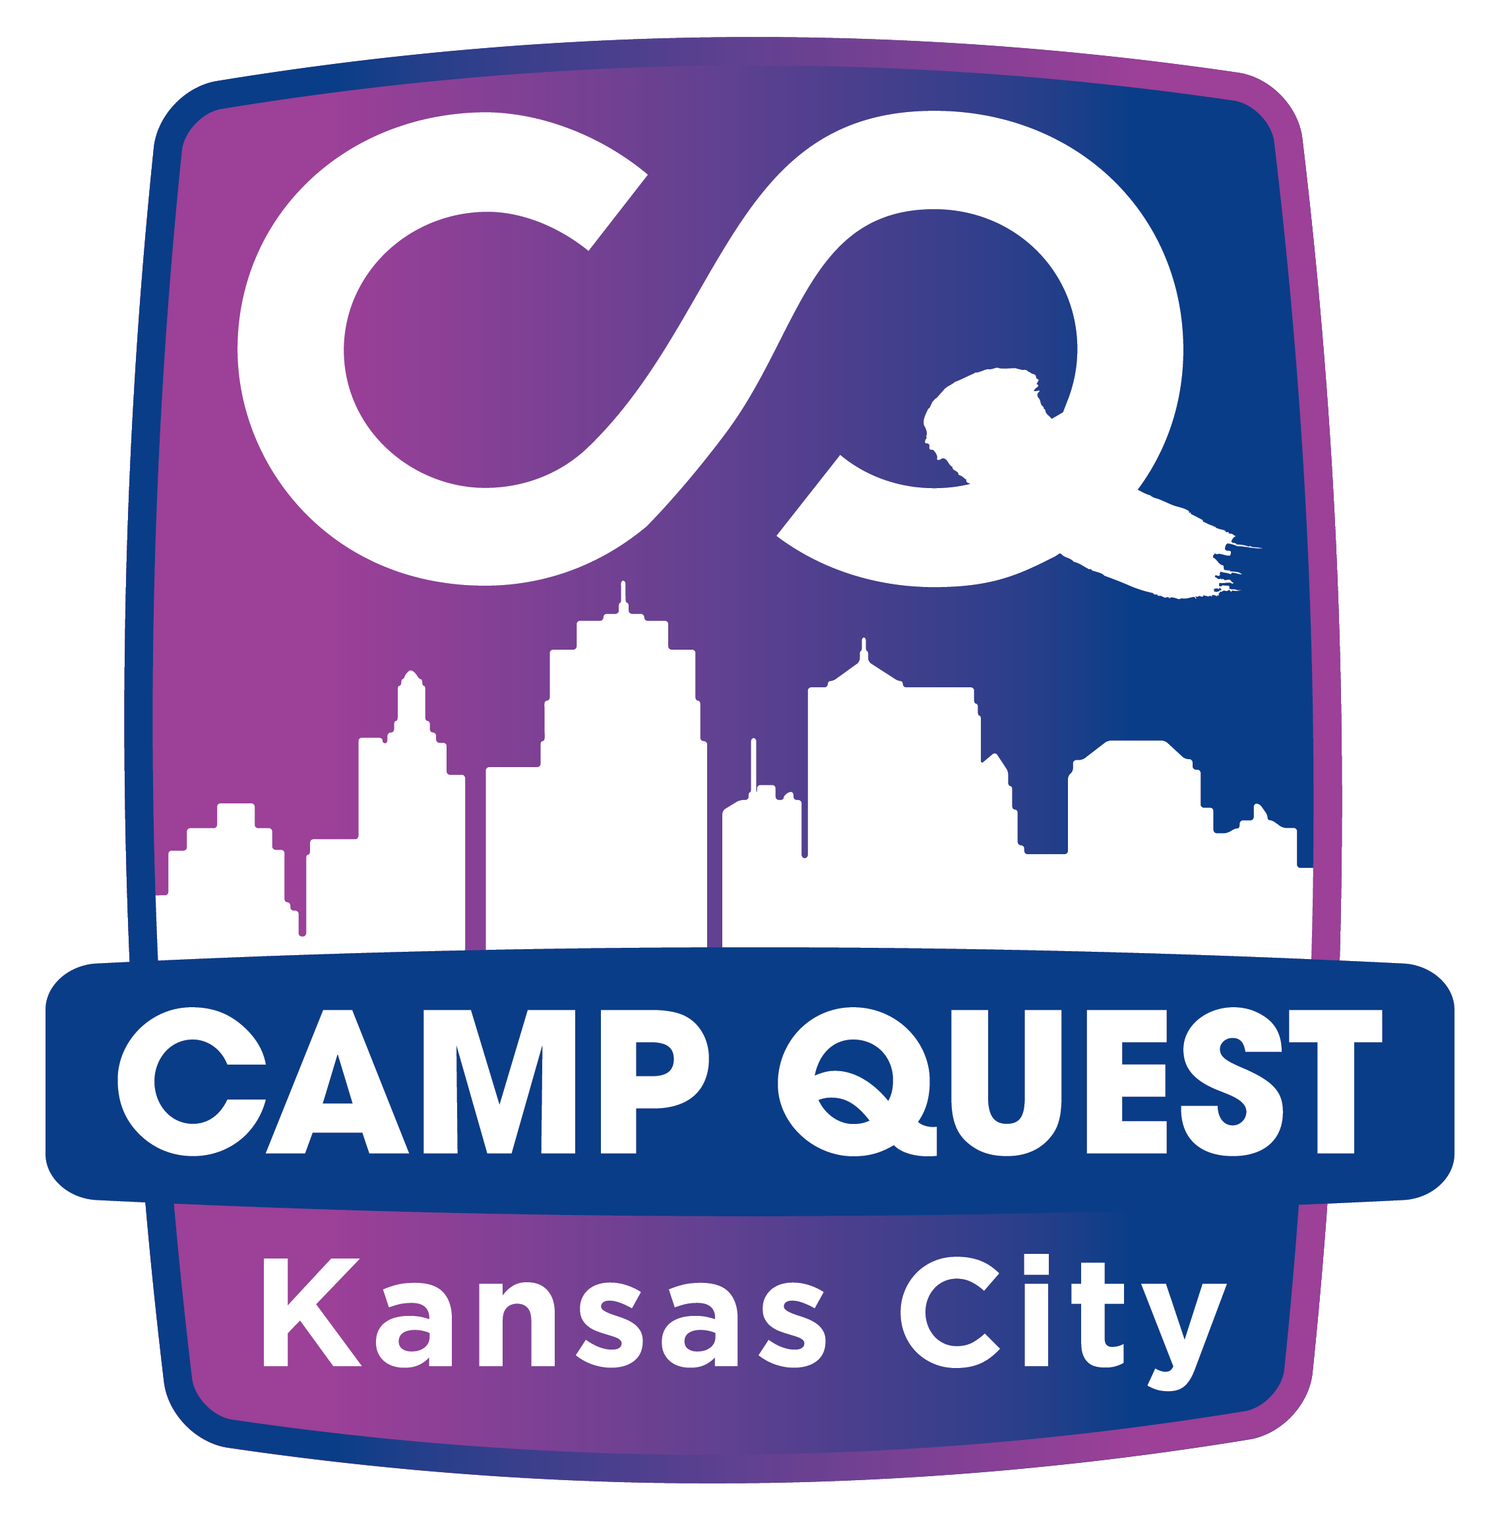 Camp Quest Kansas City